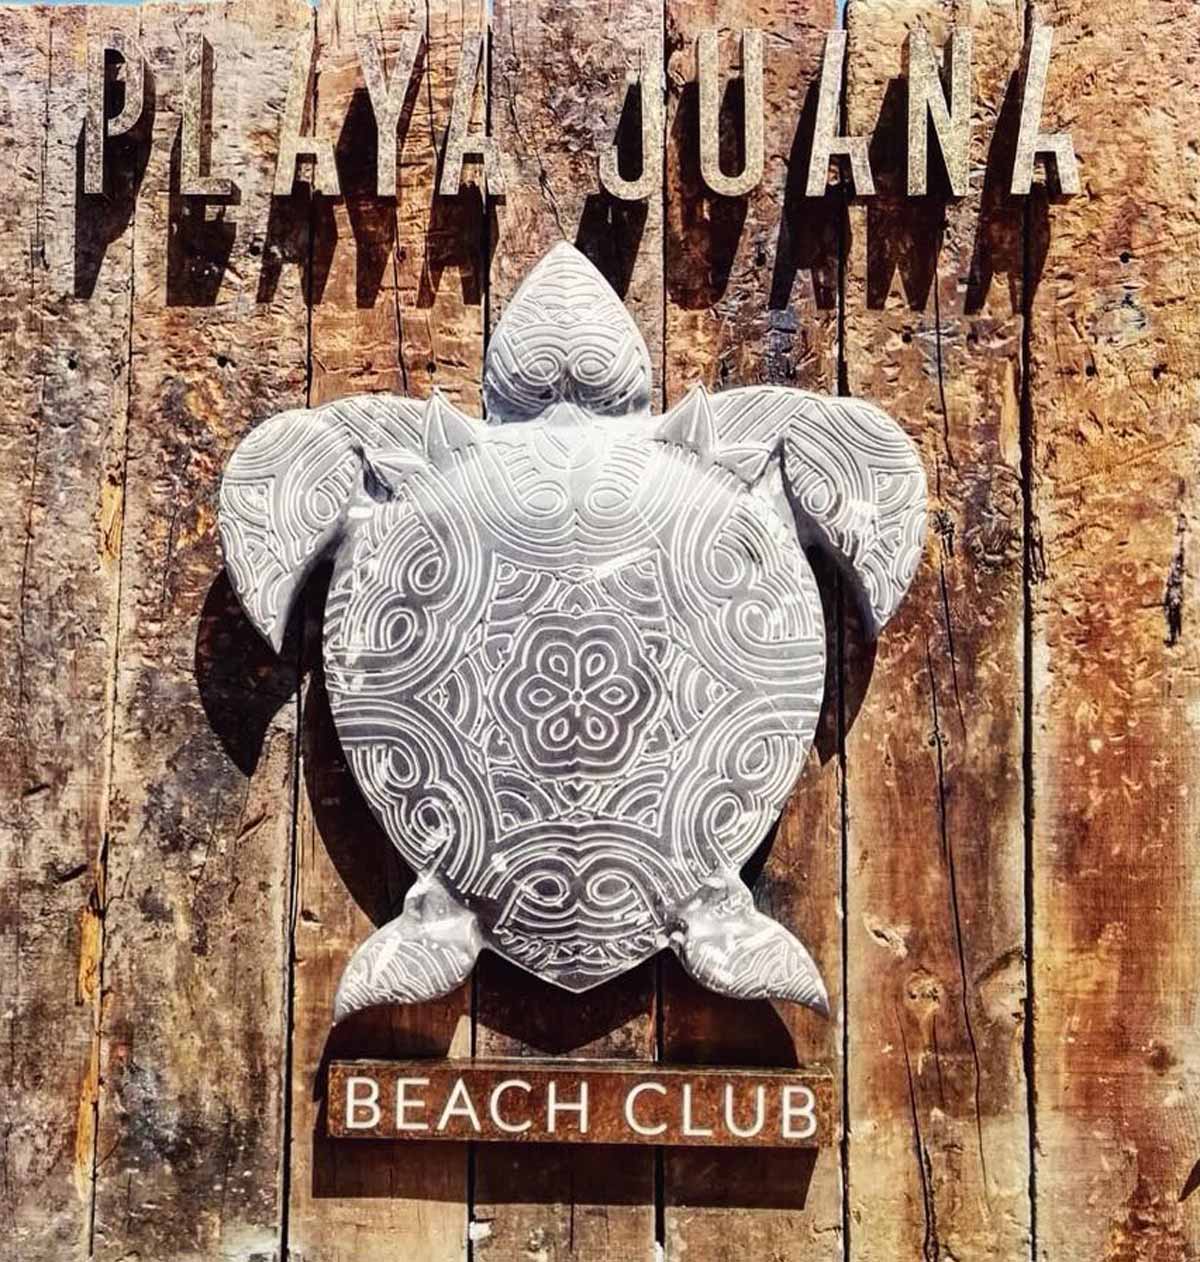 diseñp de logotipo en madera para beach club